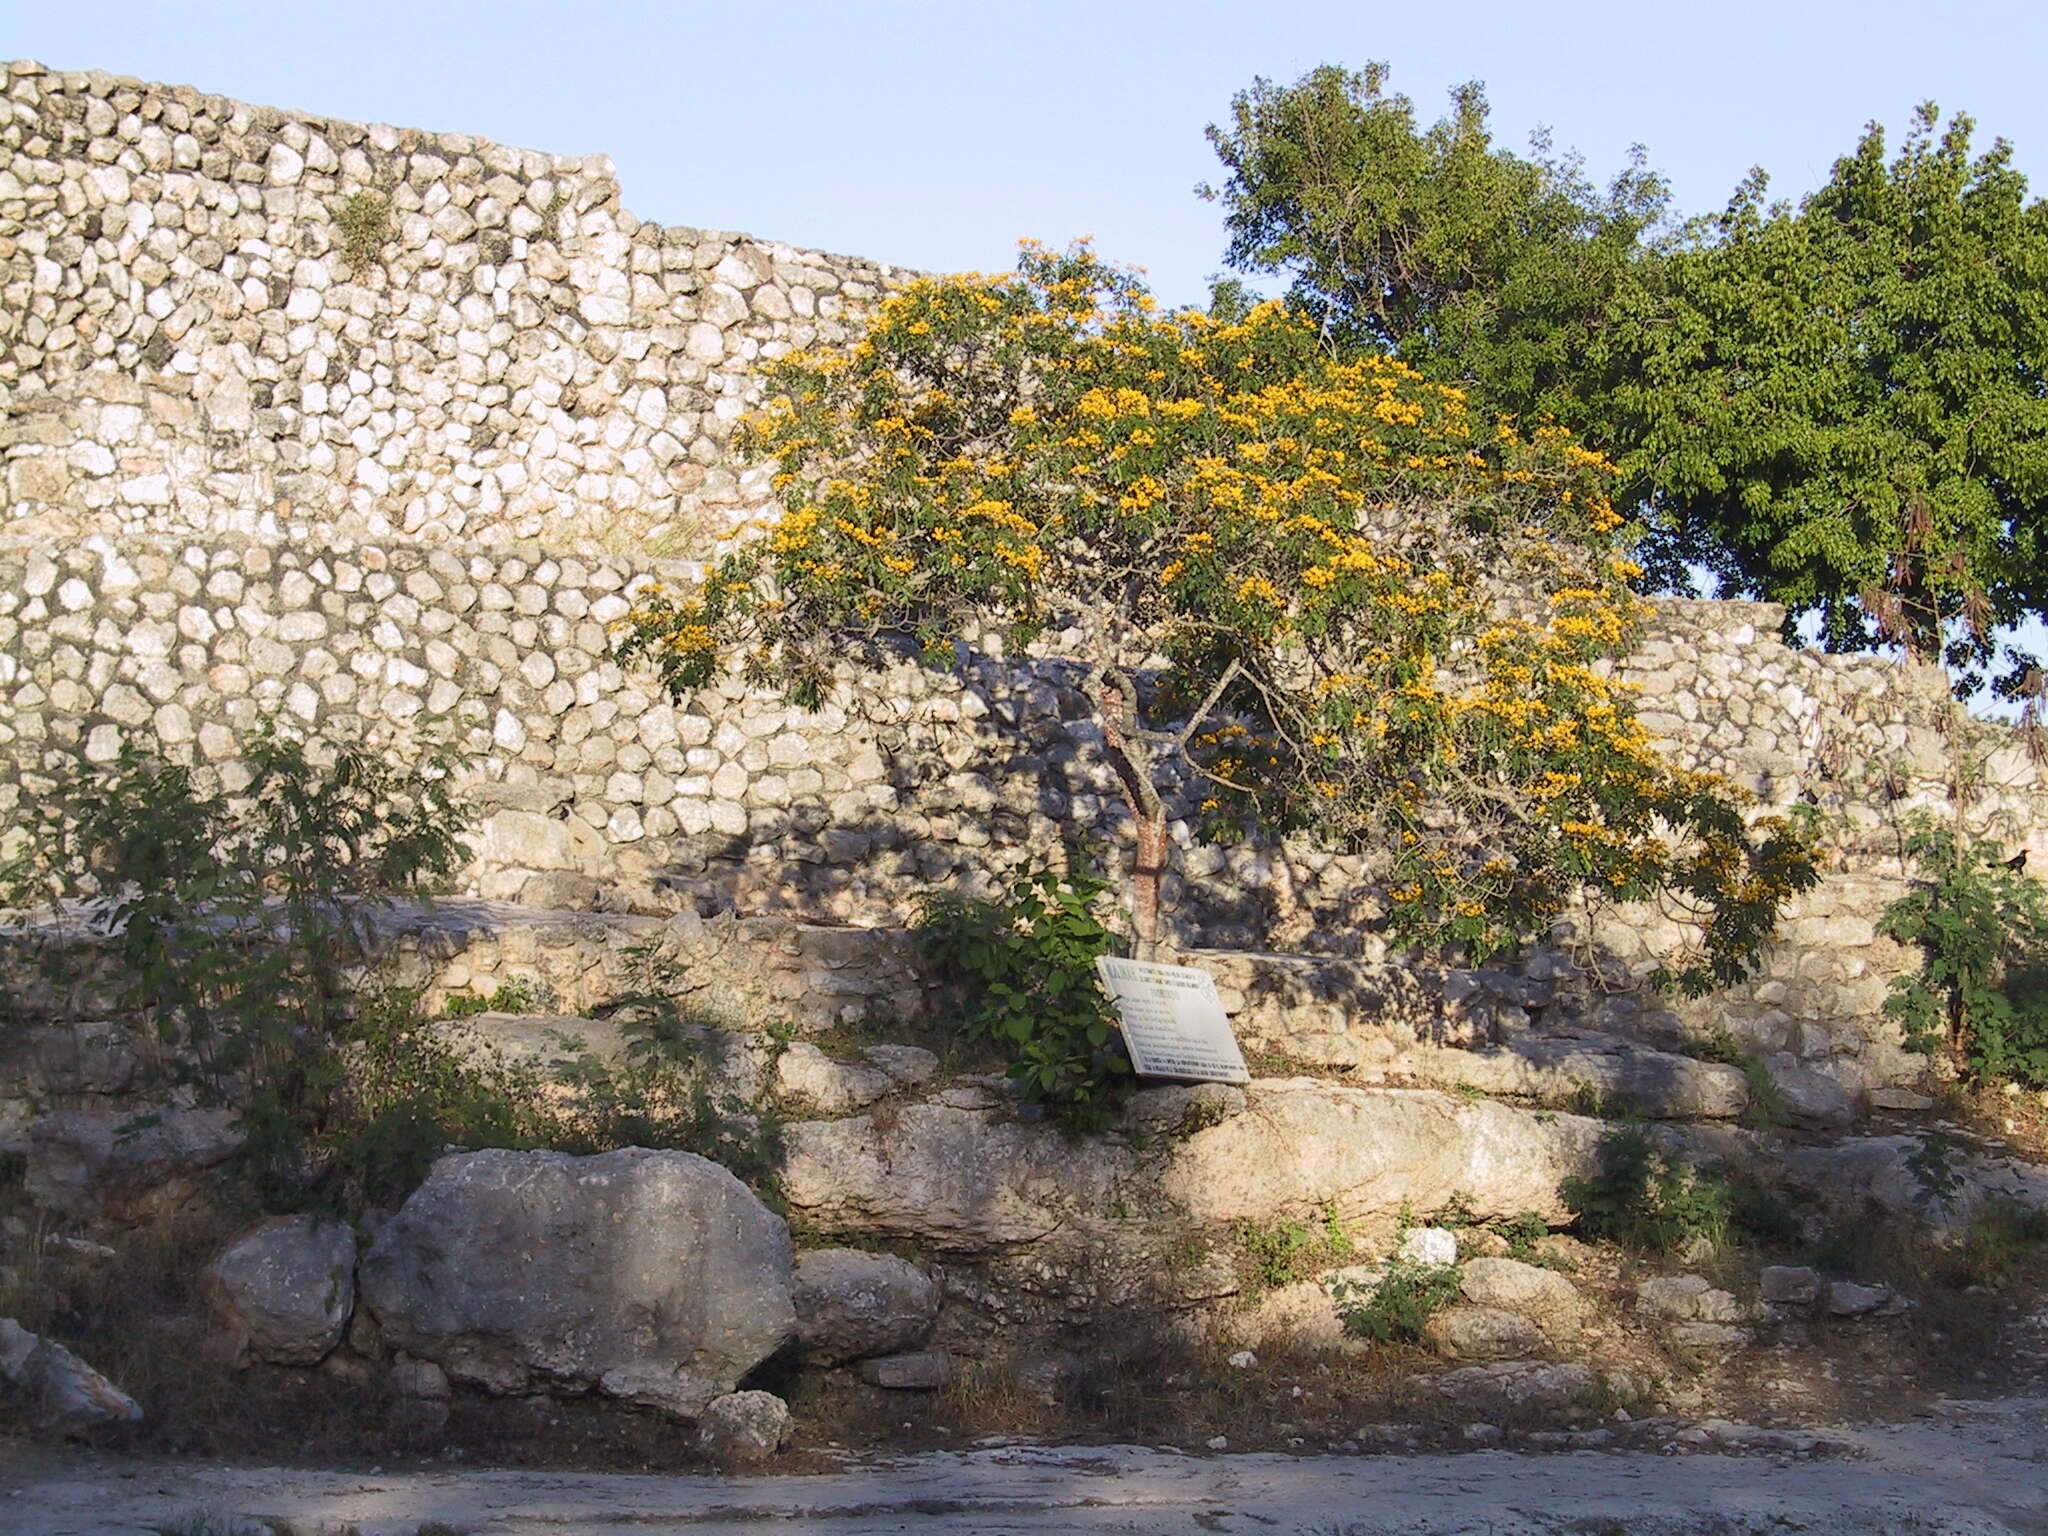 Image of limestone senna